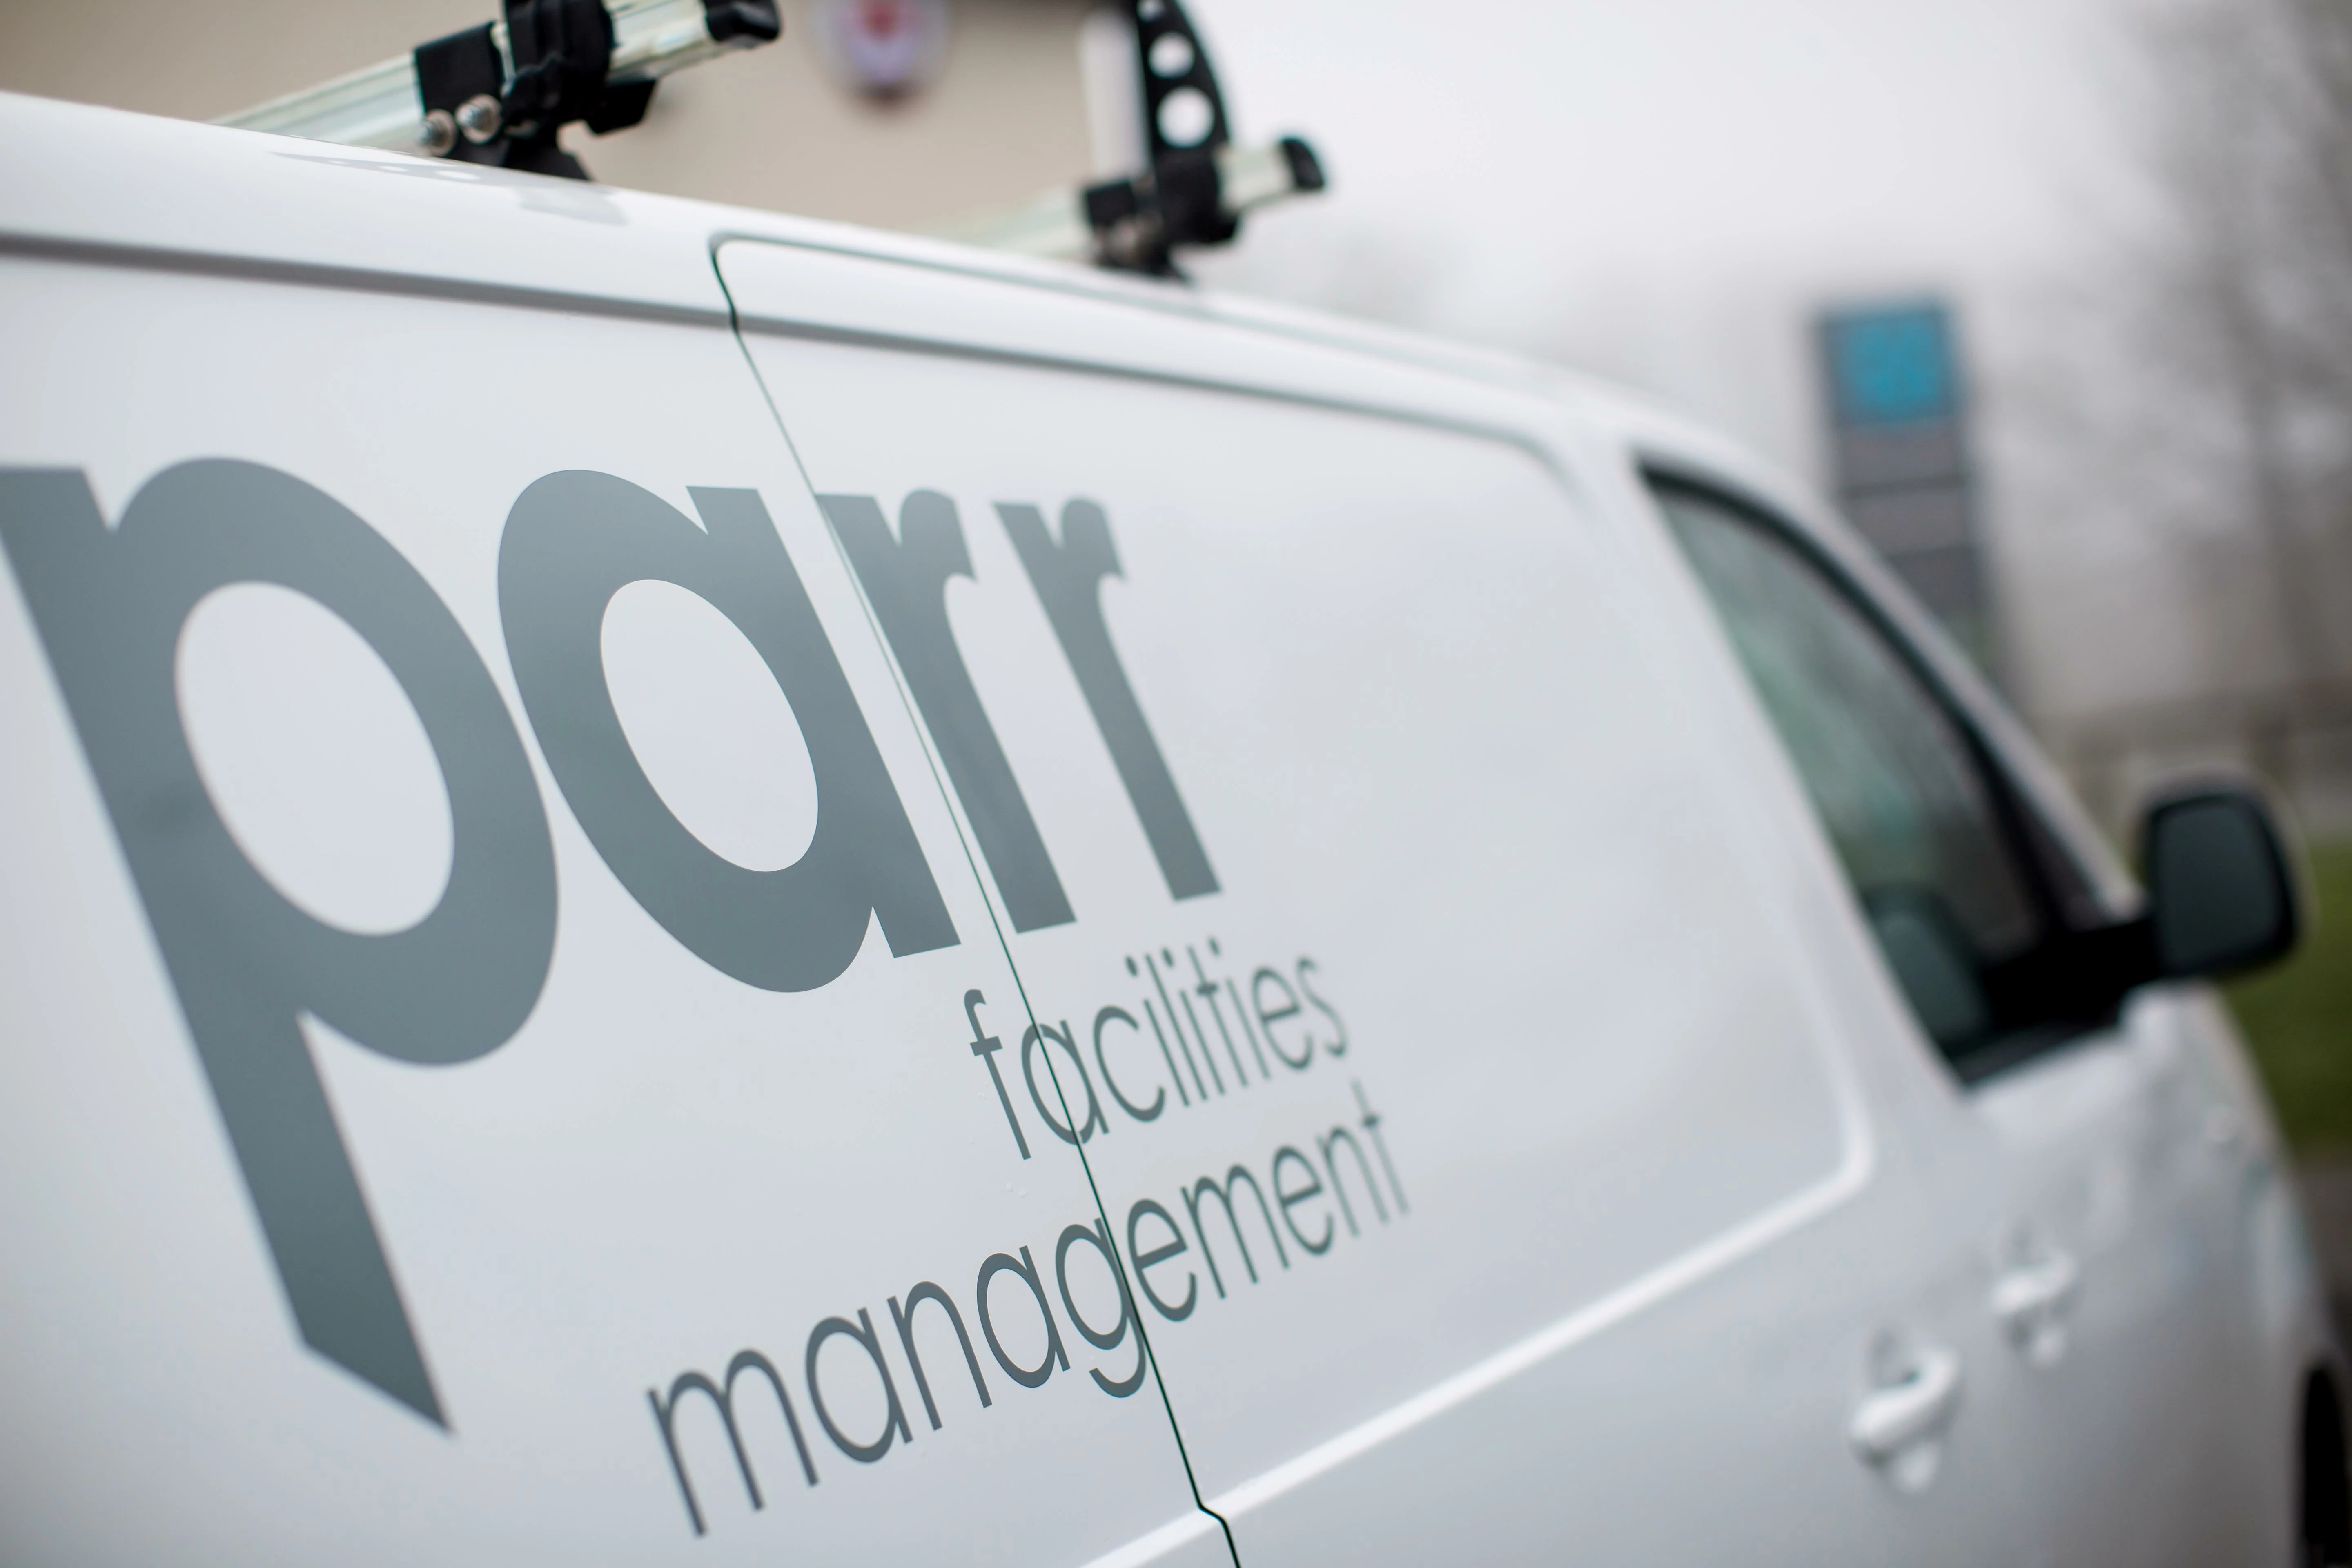 Parr Facilities Management Van